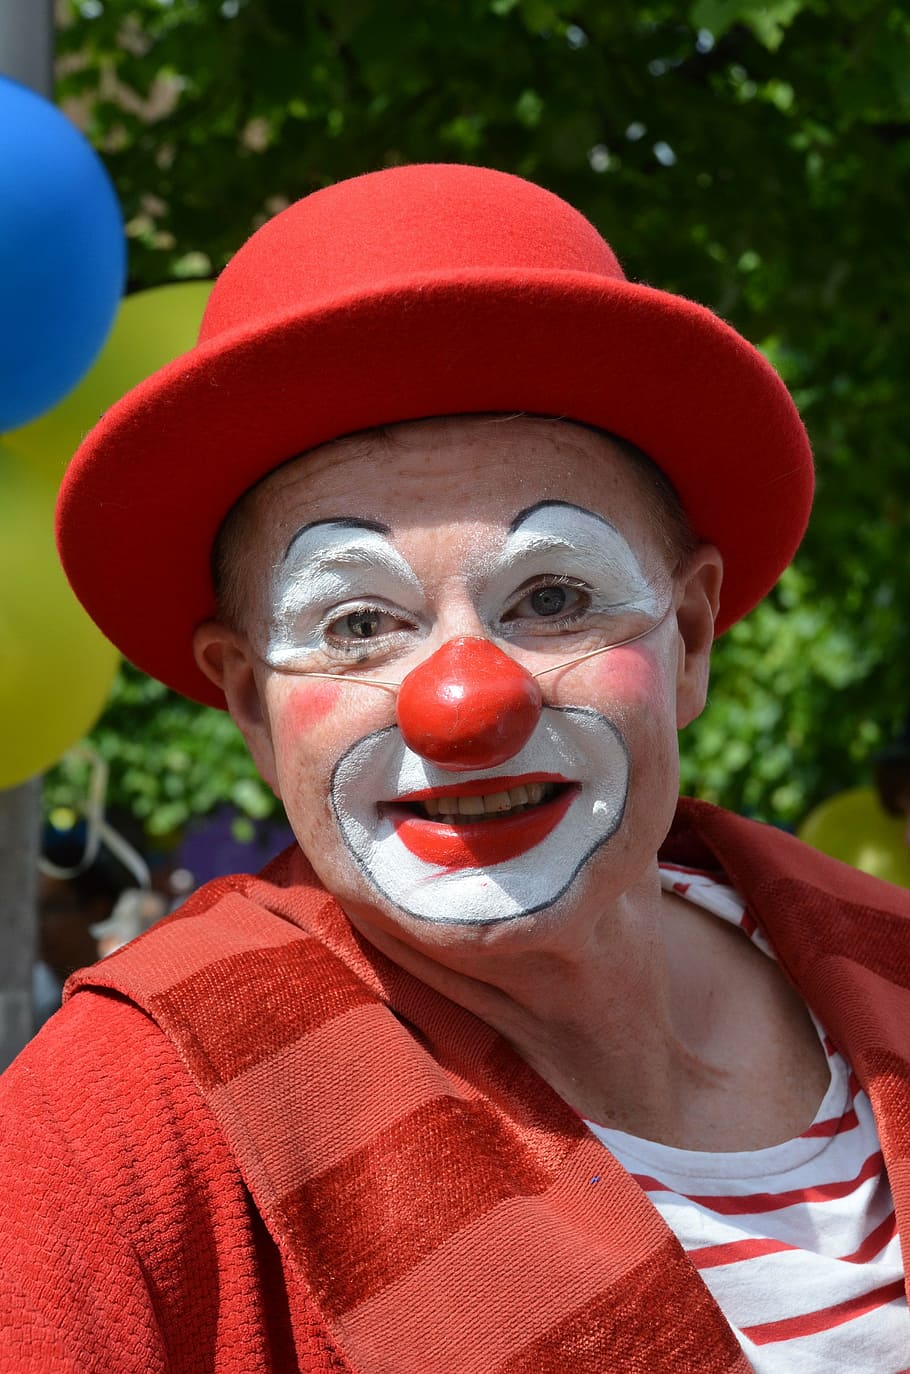 man, clown face paint, clown, comedian, nose, circus, funny, laugh, make-up, face